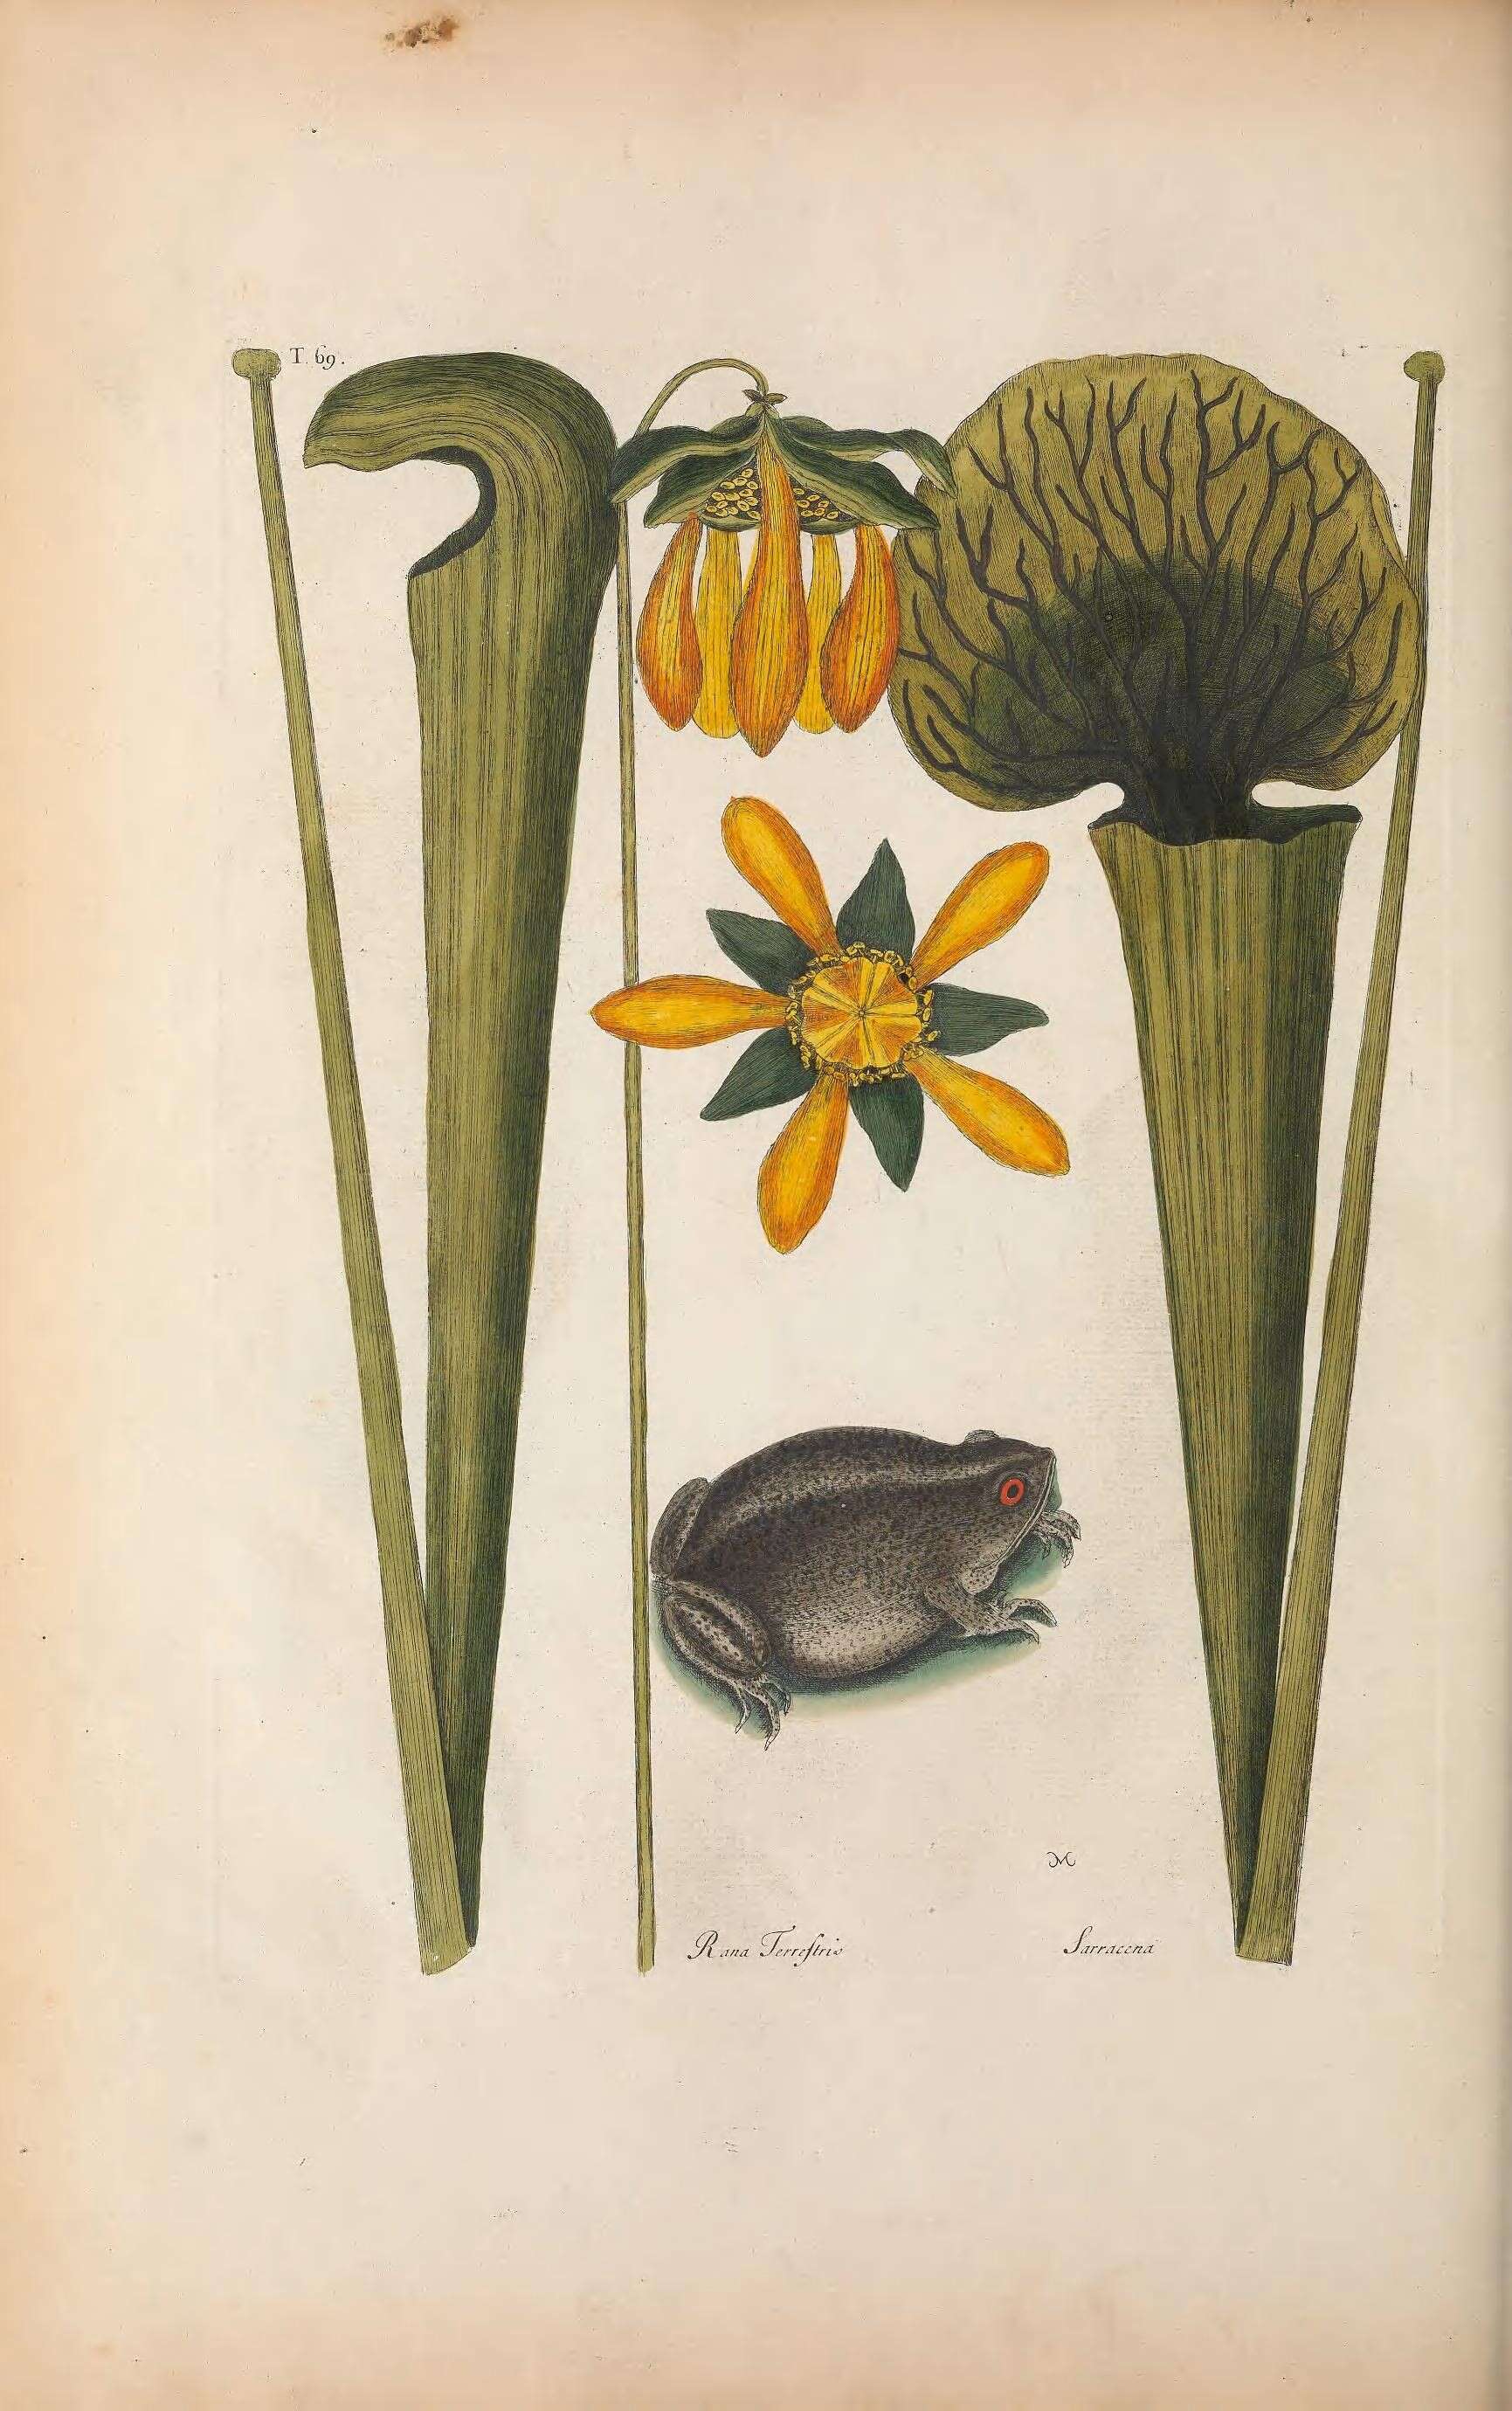 صورة Anaxyrus terrestris (Bonnaterre 1789)